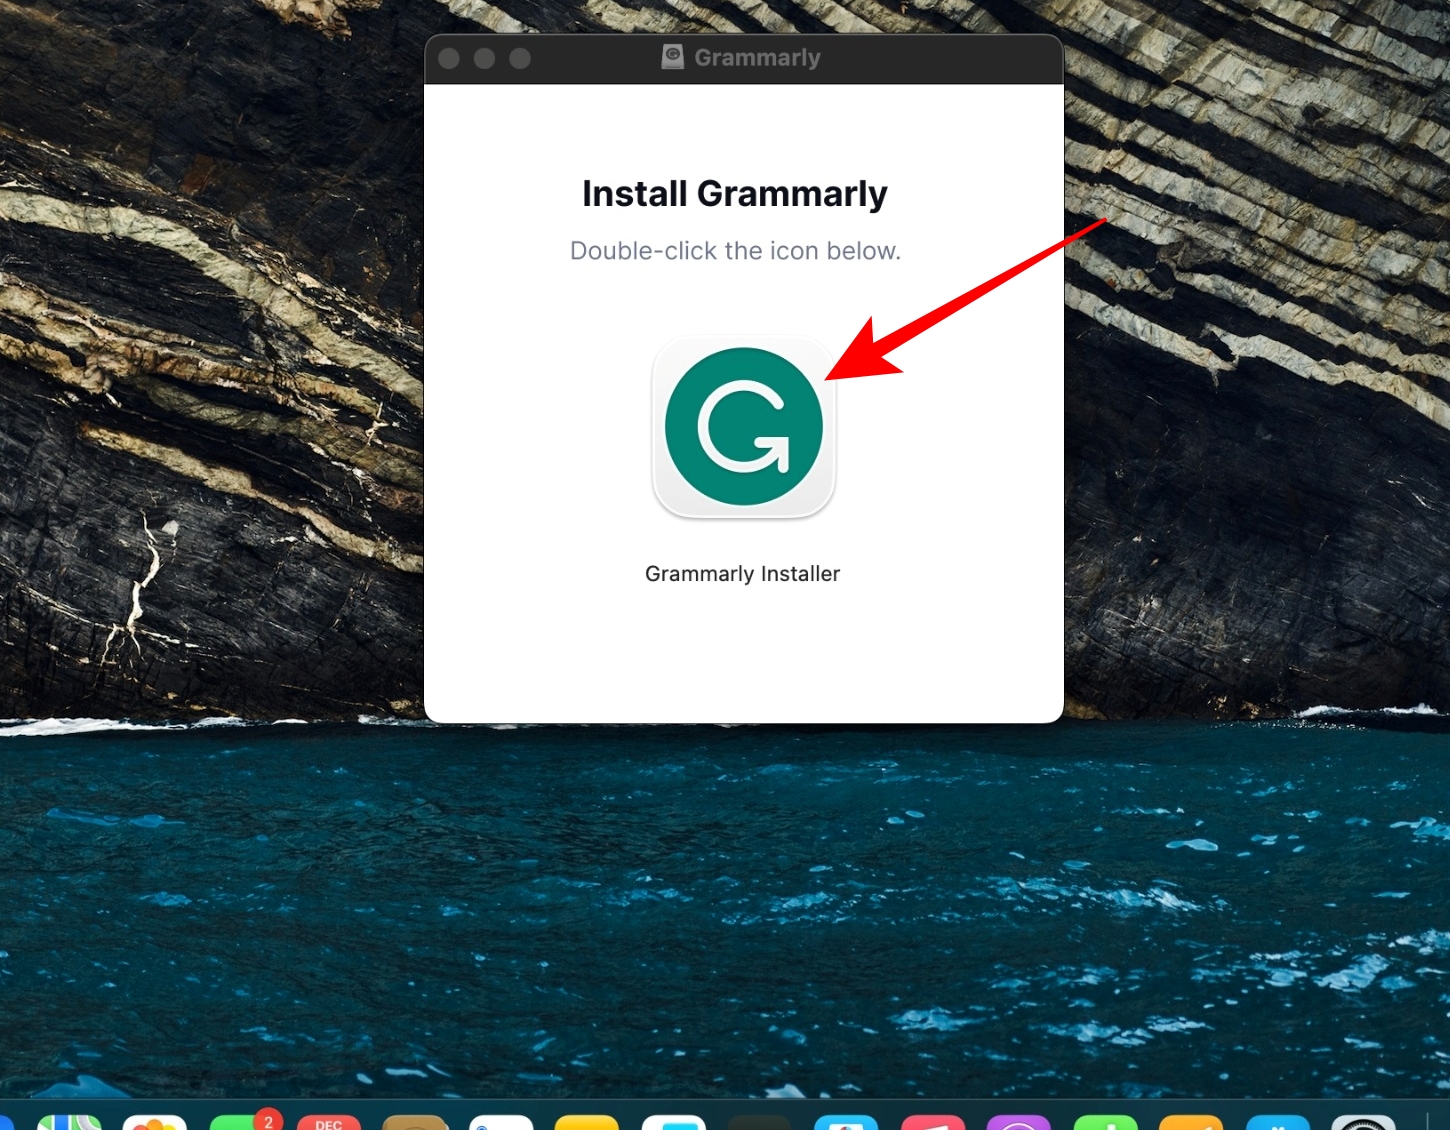 Install Grammarly popup on Mac